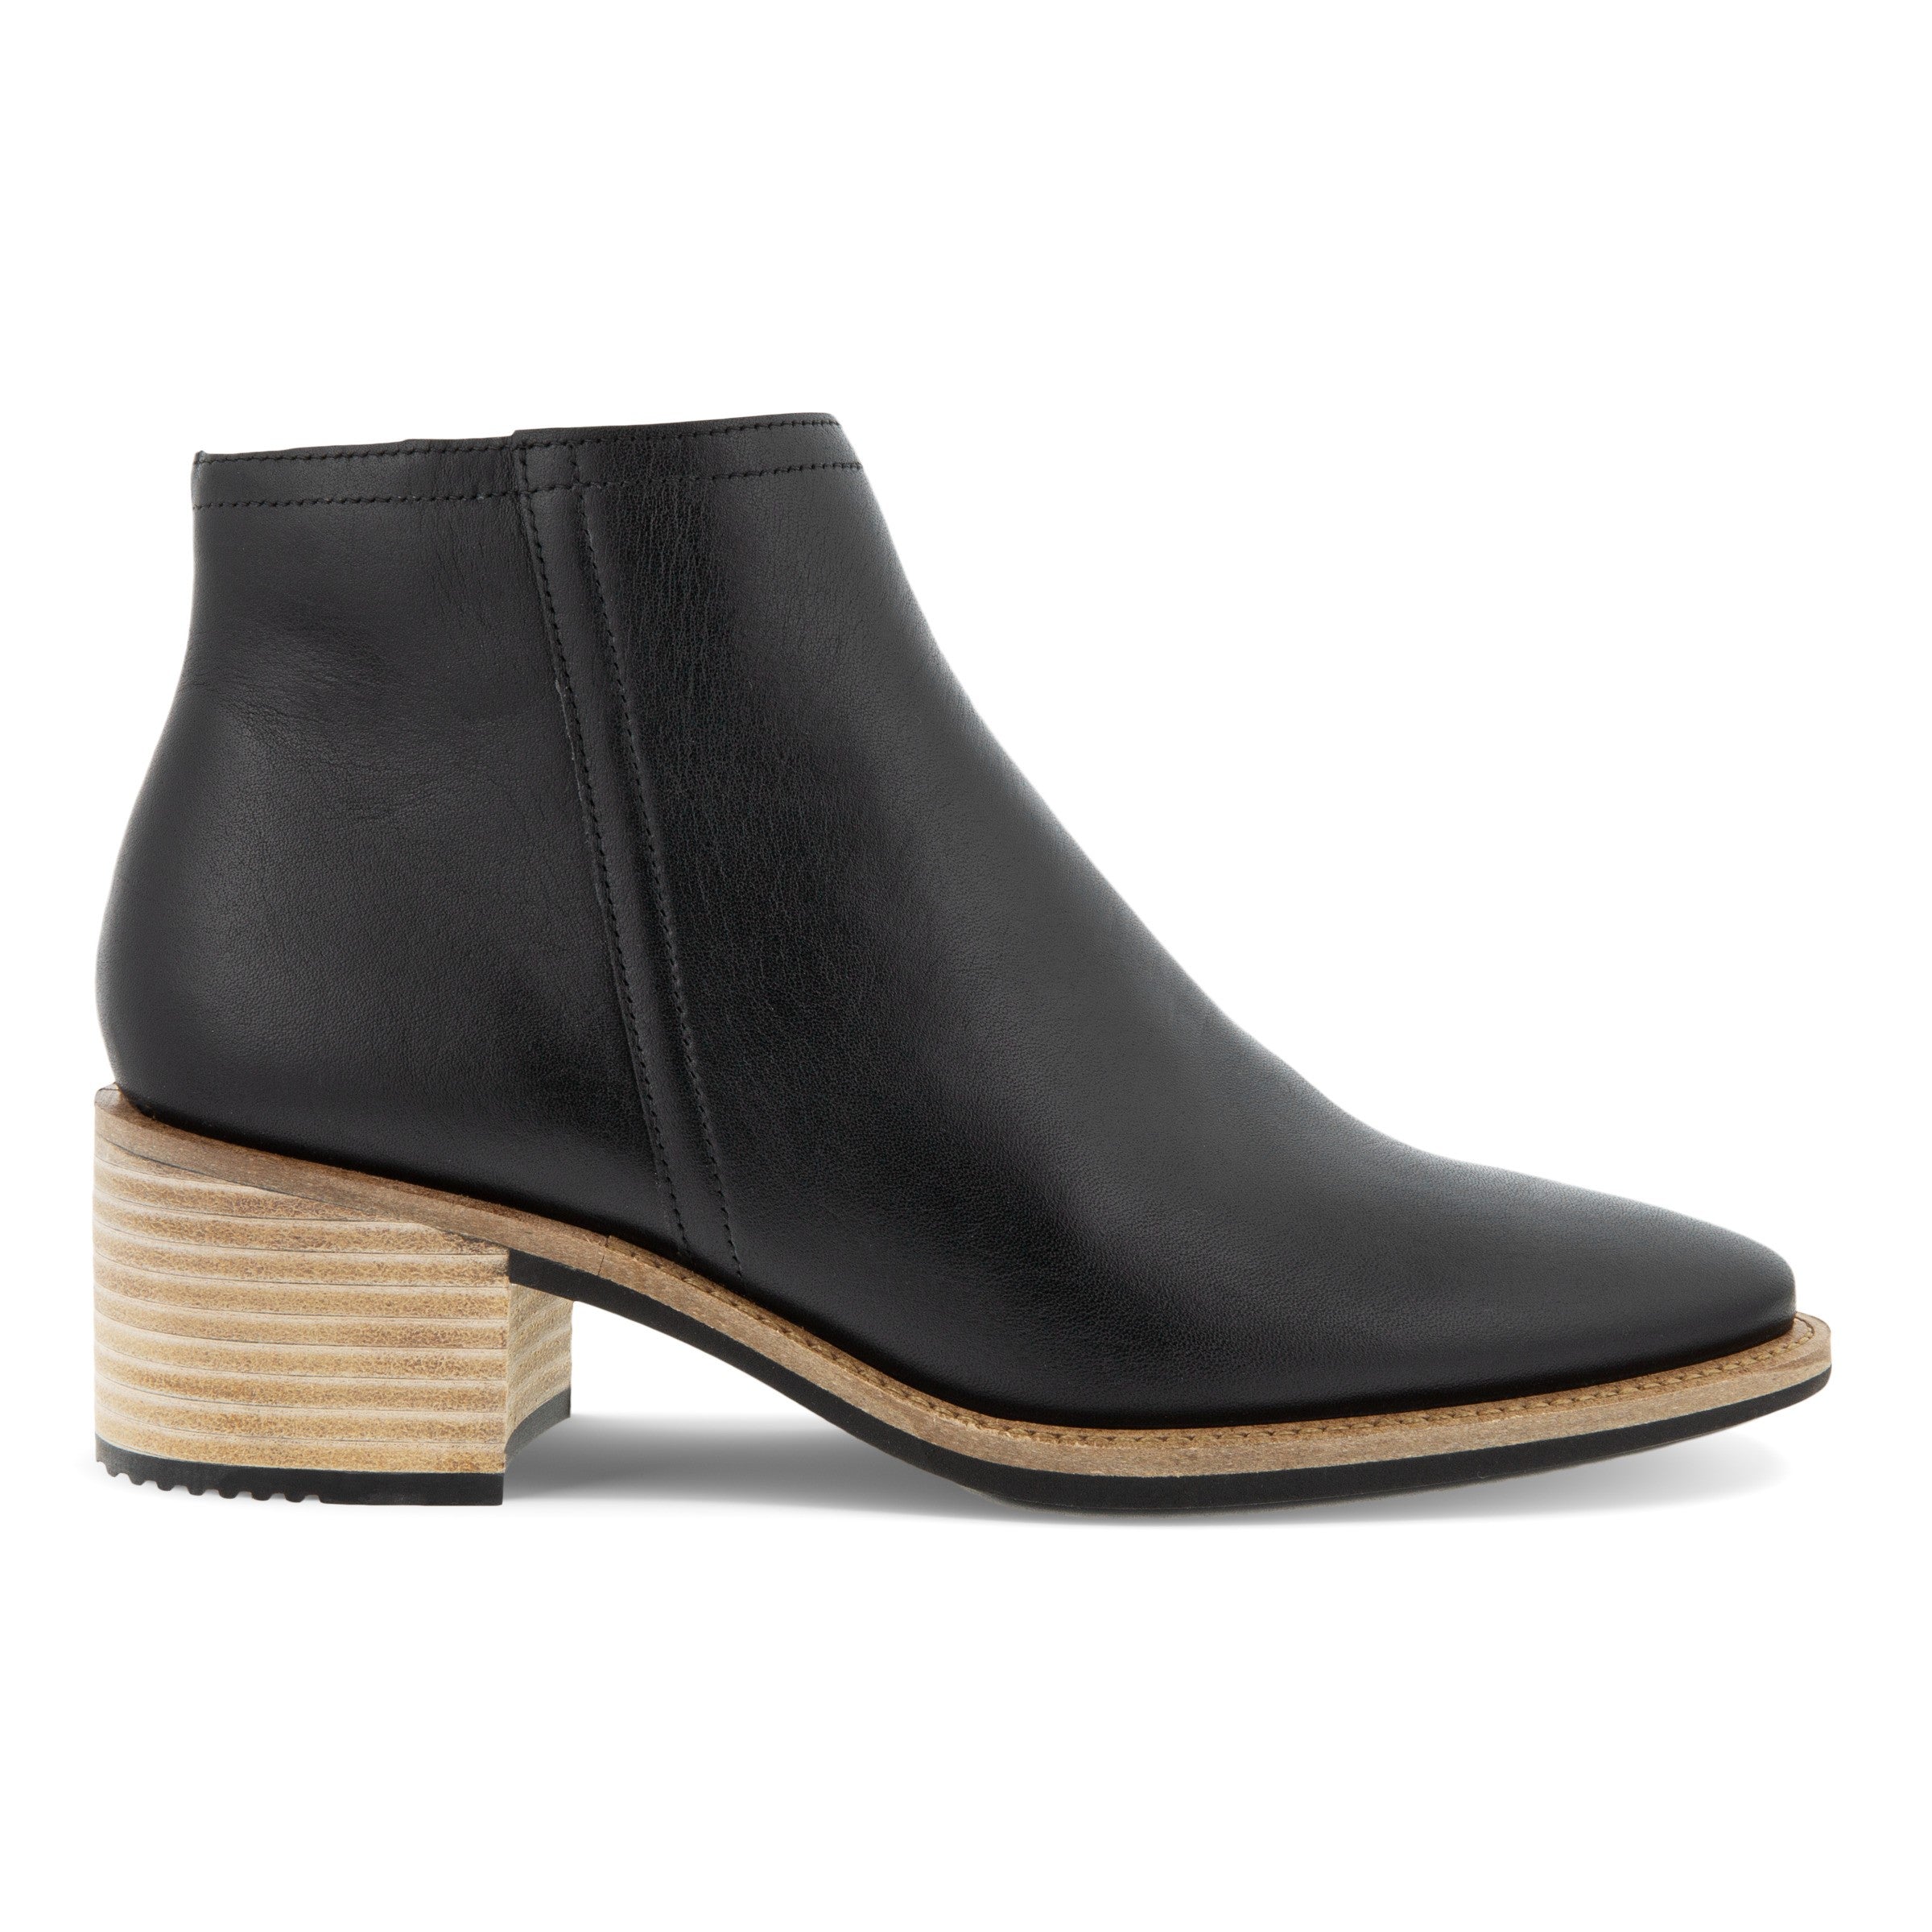 Shape 35 212313 W - shoe&amp;me - Ecco - Boot - Boots, Winter, Womens